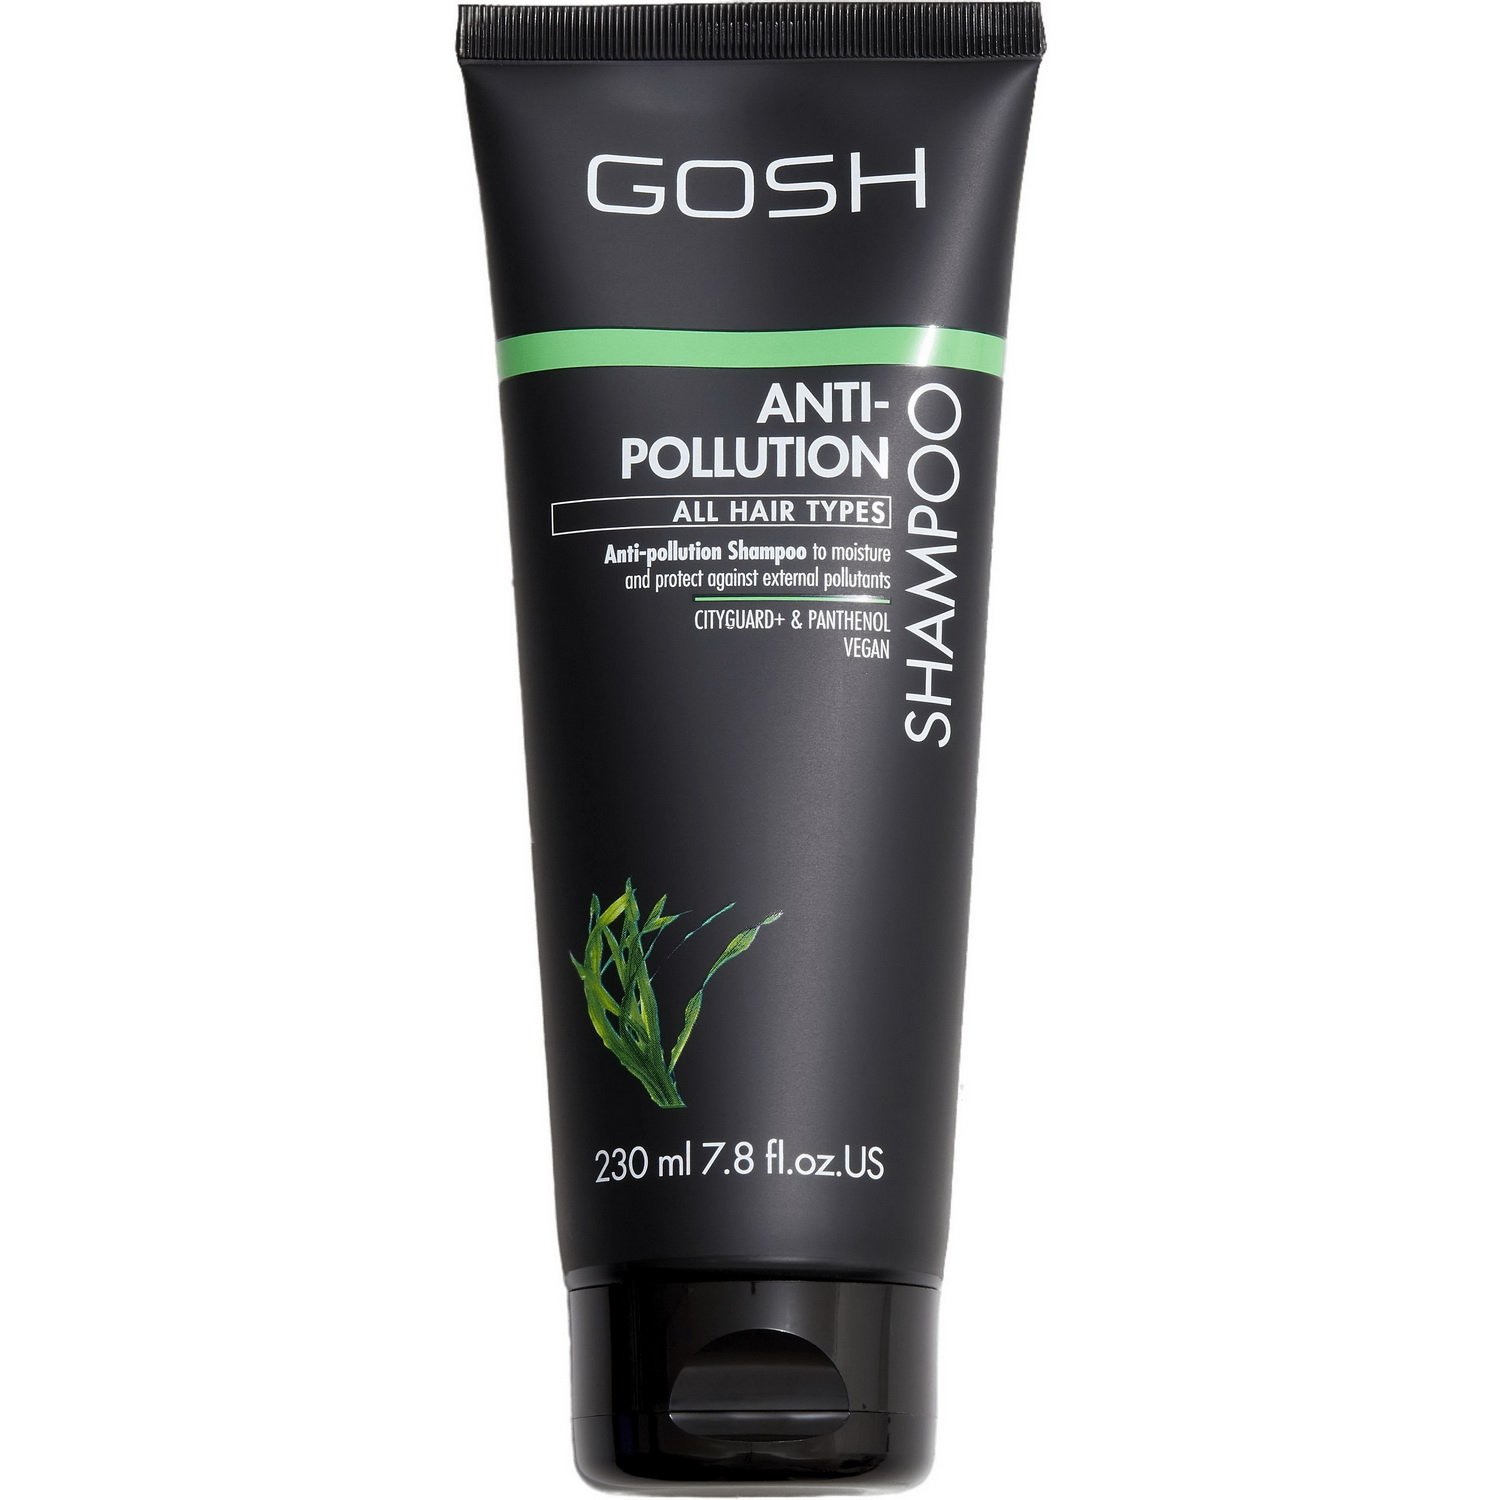 Шампунь Gosh Anti-Pollution, очищающий и увлажняющий, для всех типов волос, 230 мл - фото 1